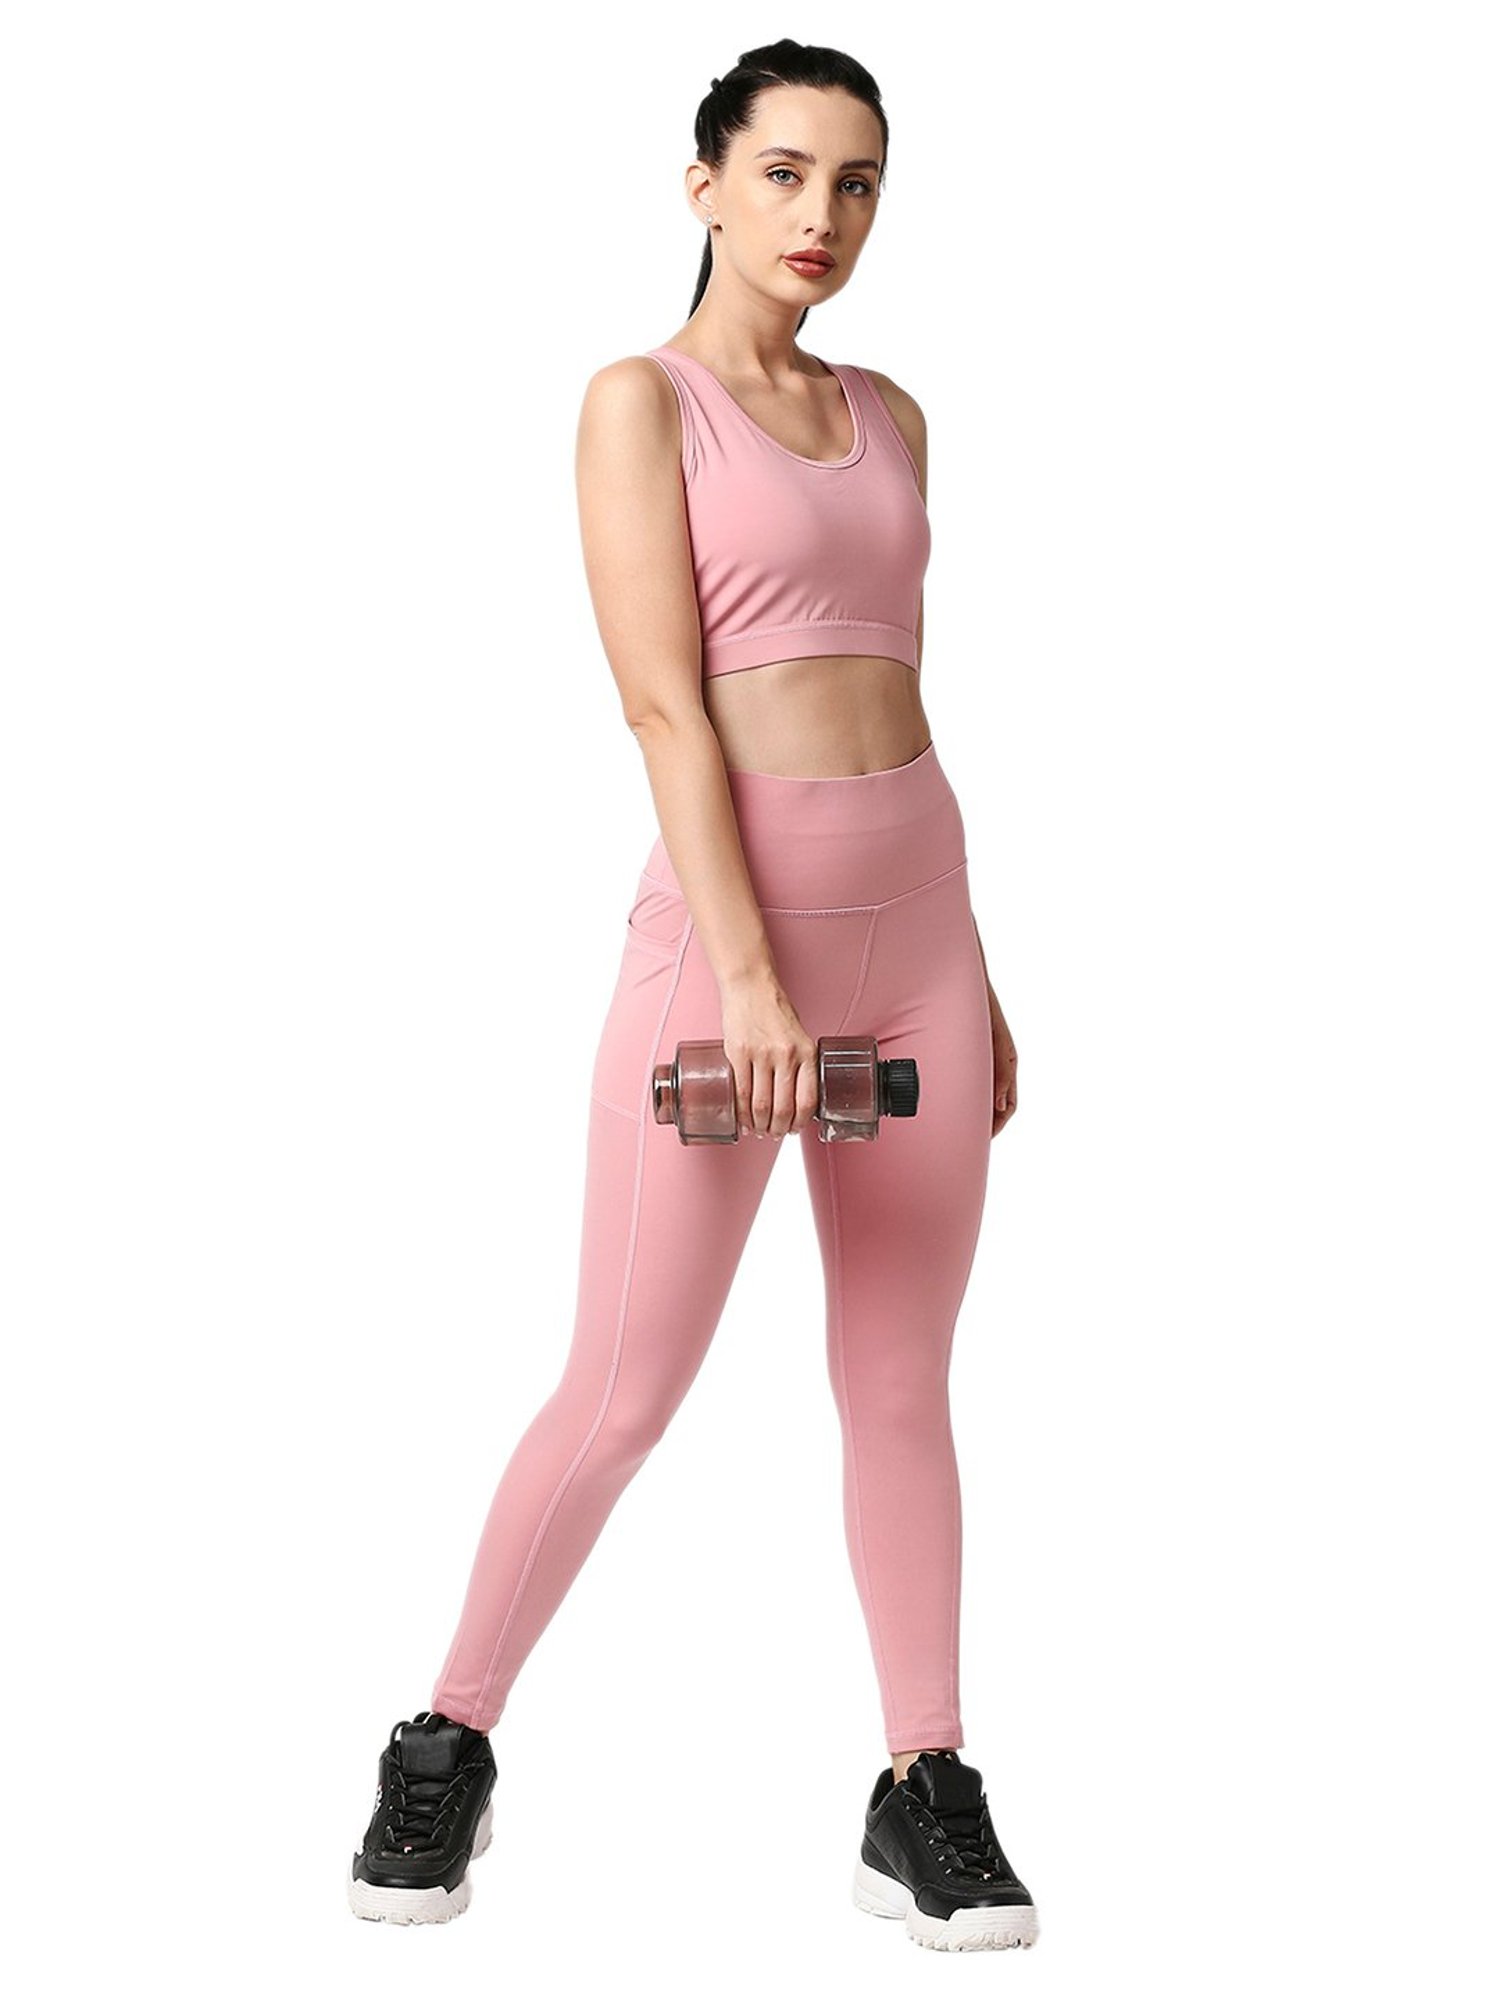 Buy Soie Pink Sports Bra for Women's Online @ Tata CLiQ